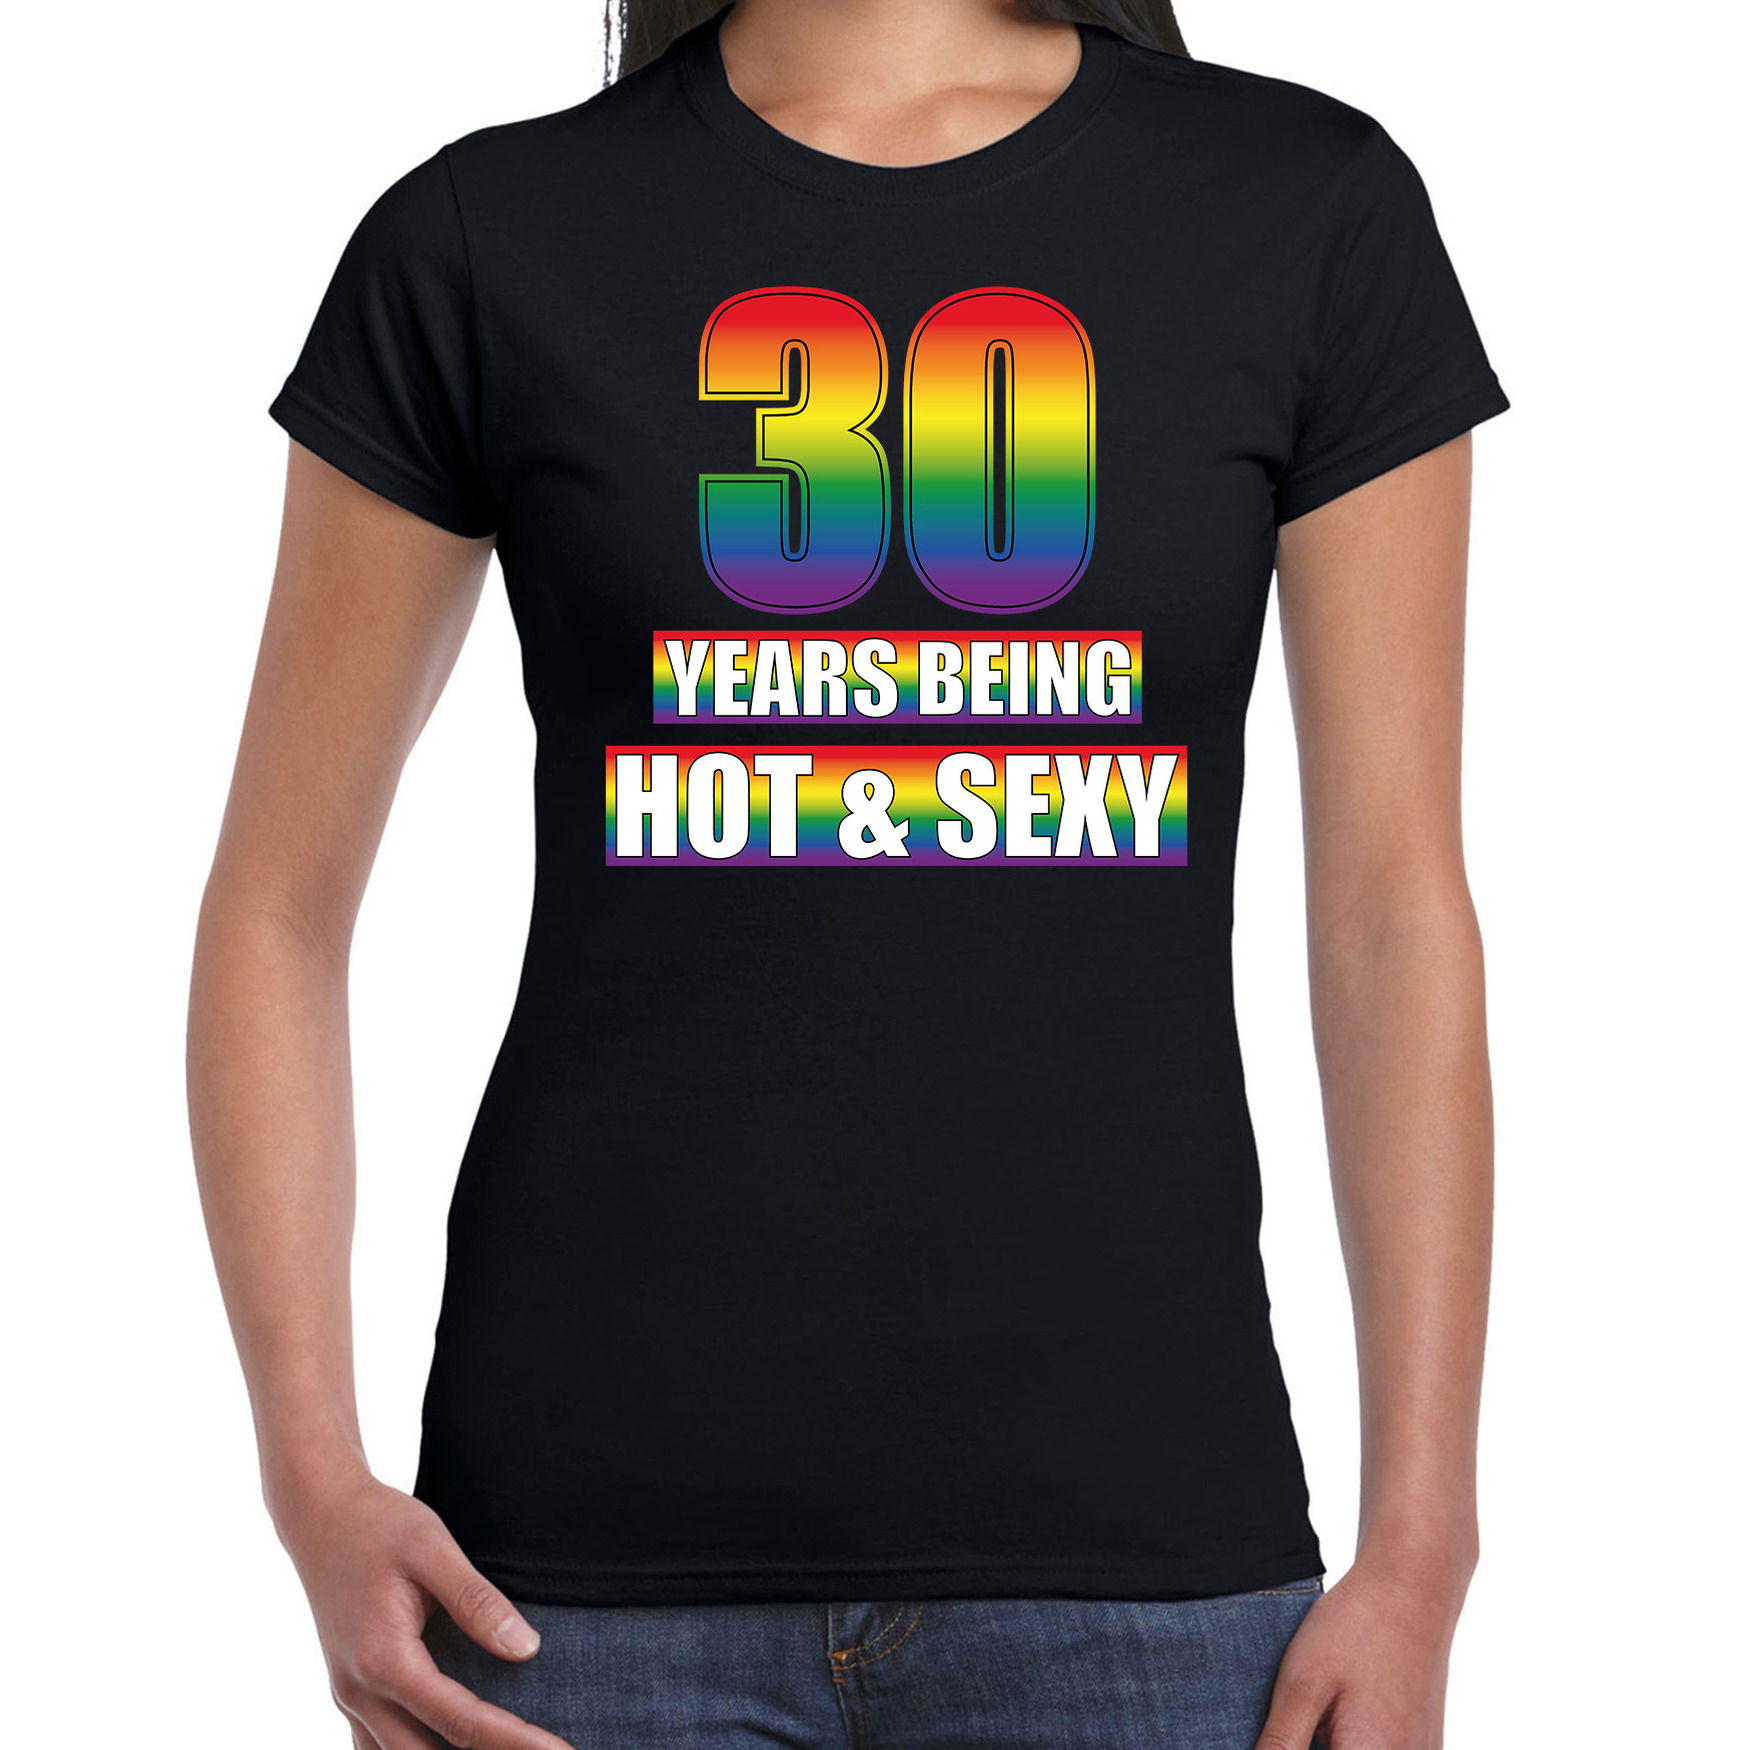 Hot en sexy 30 jaar verjaardag cadeau t-shirt zwart voor dames Gay- LHBT kleding-outfit